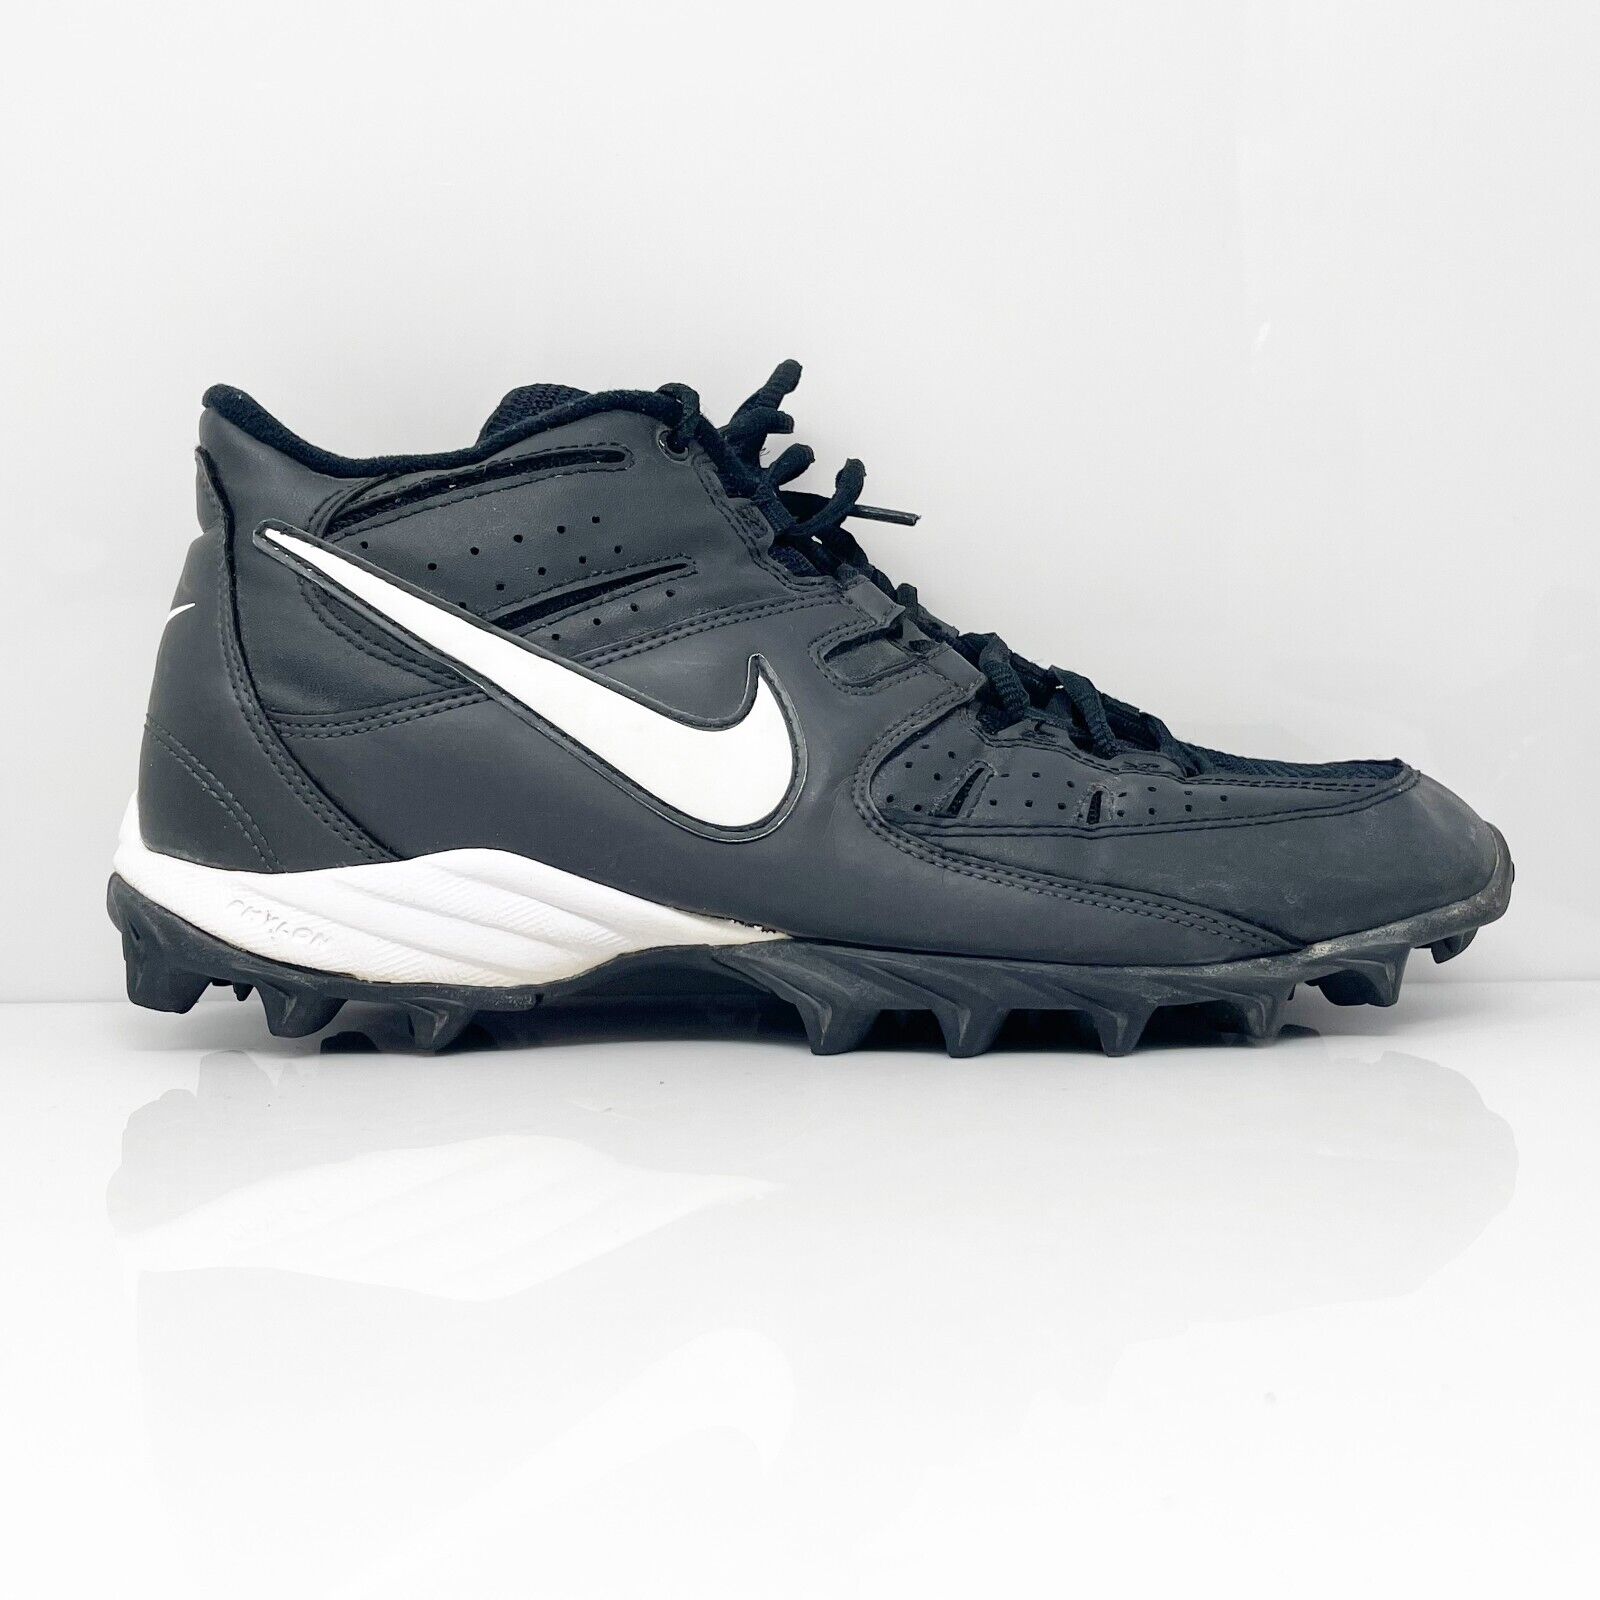 Черные футбольные бутсы Nike Mens Land Shark 308385, размер 11